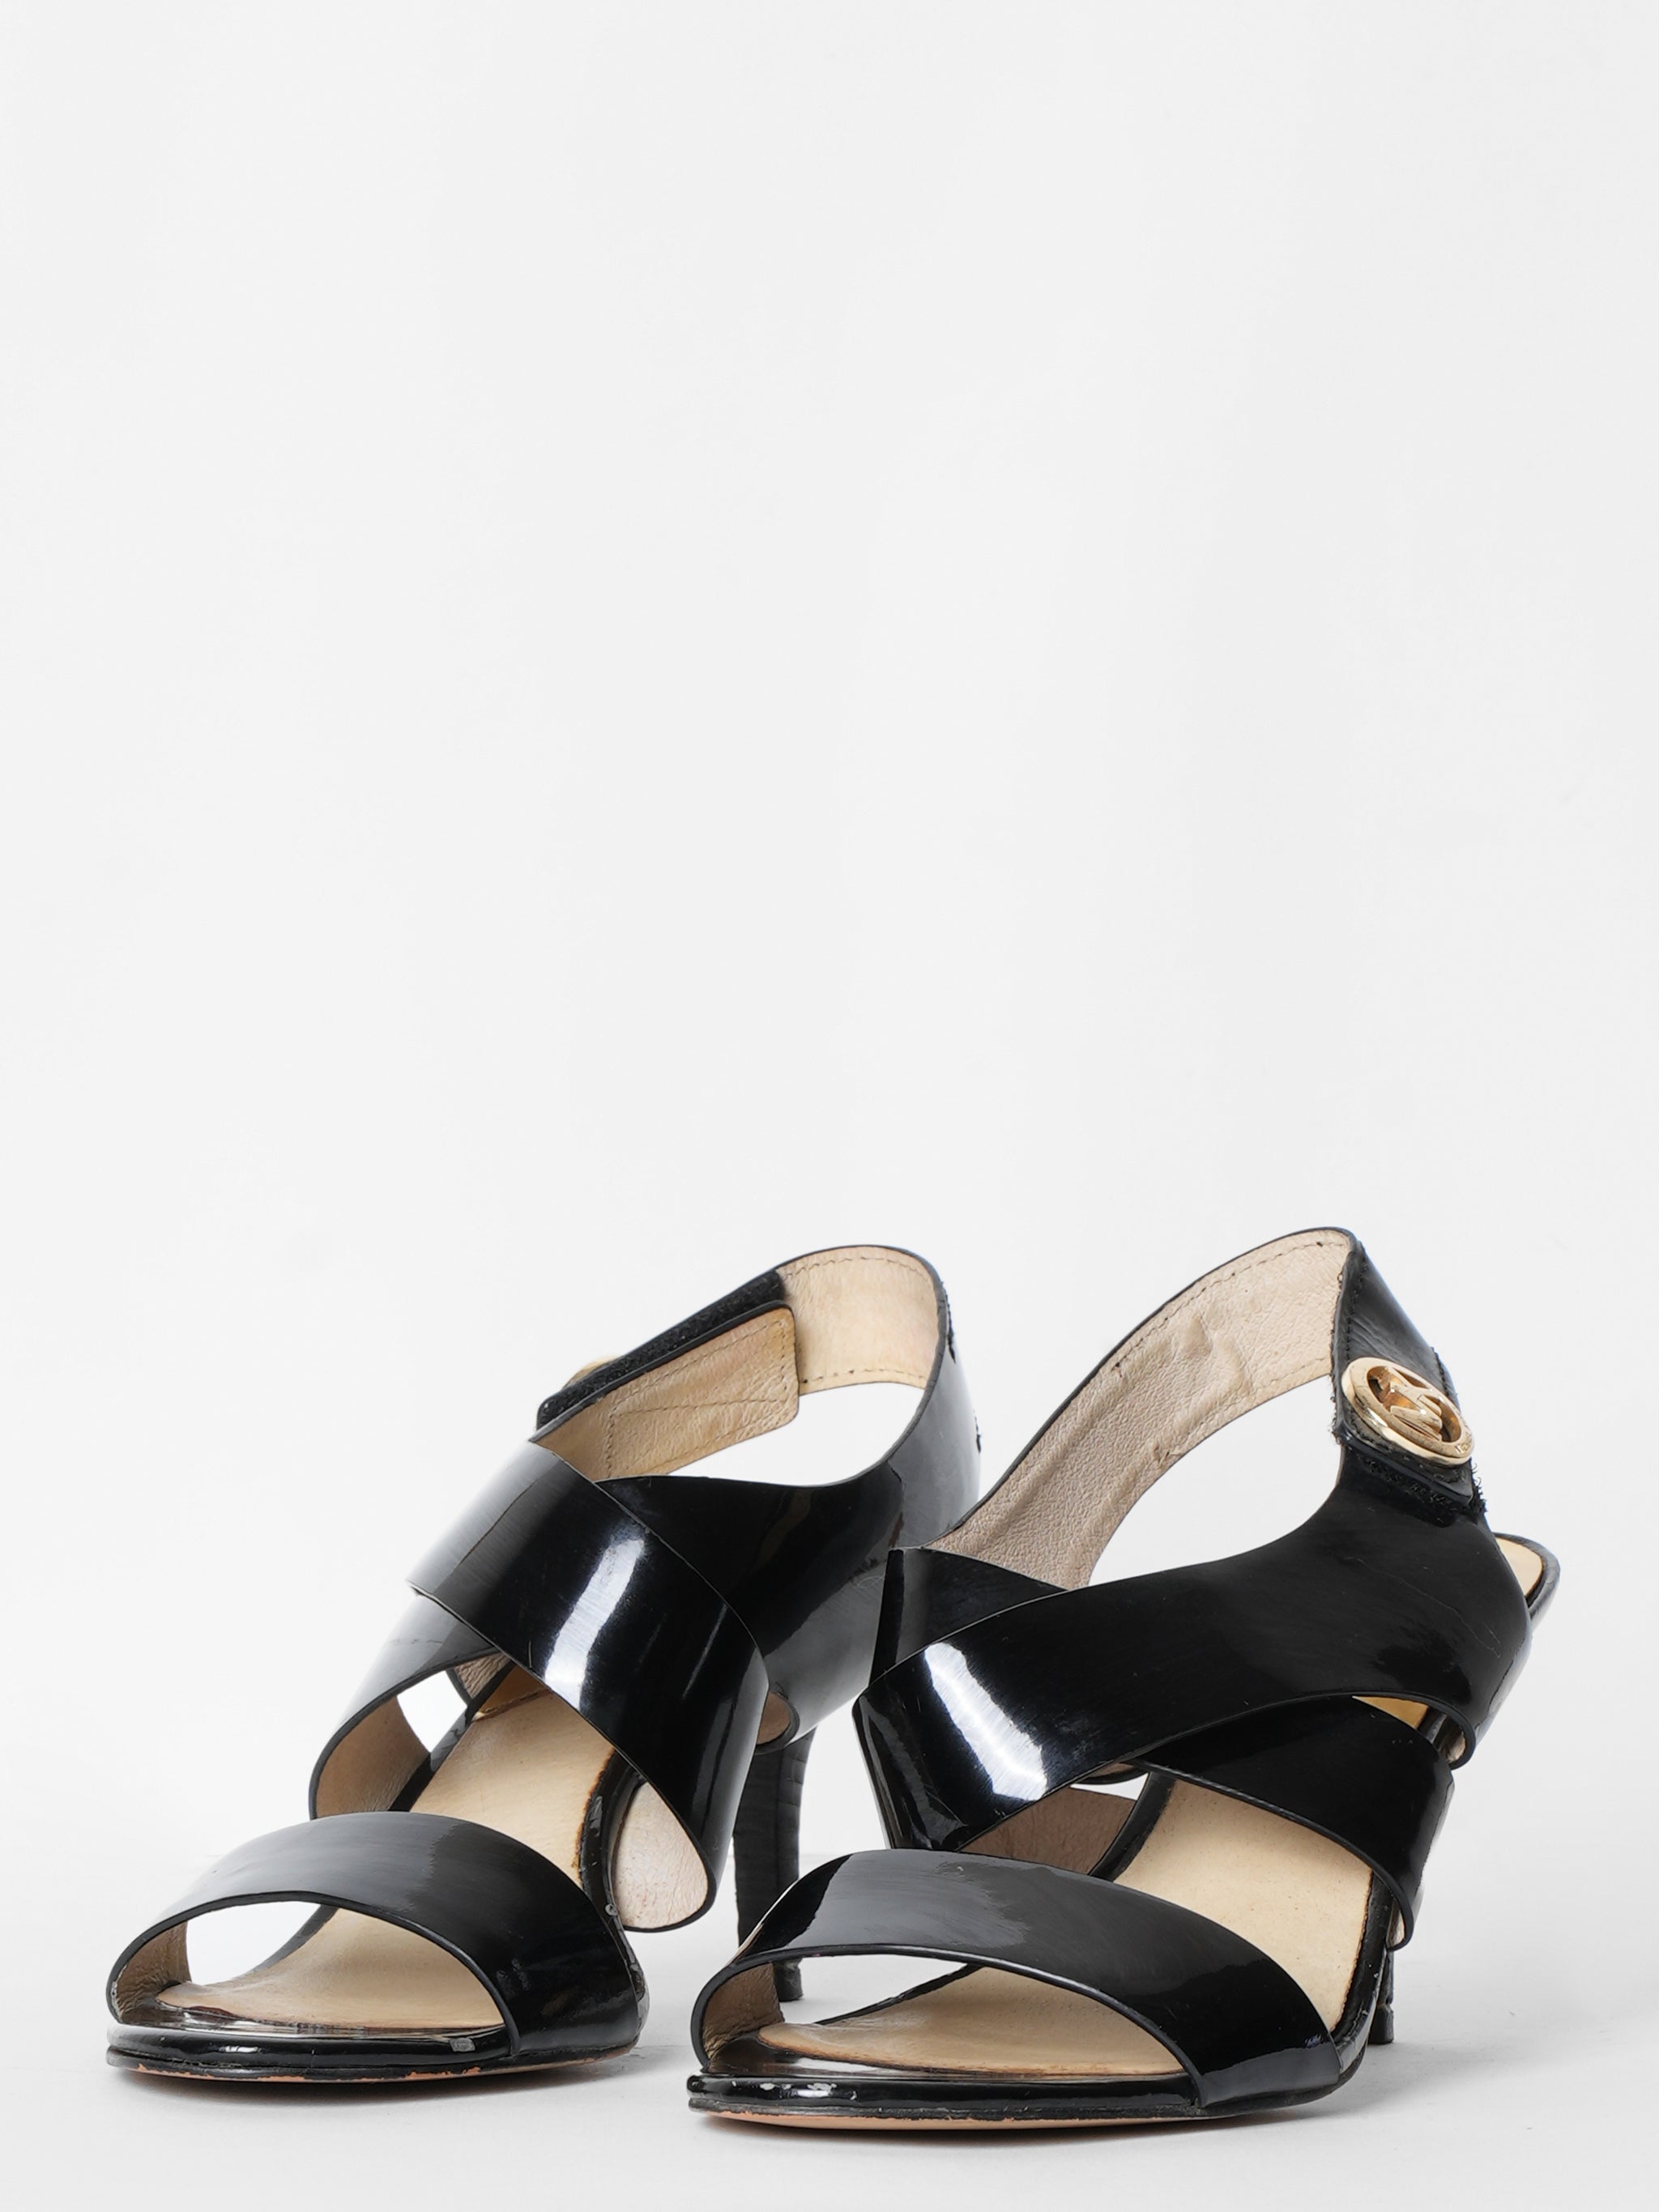 Michael Kors Black shoes